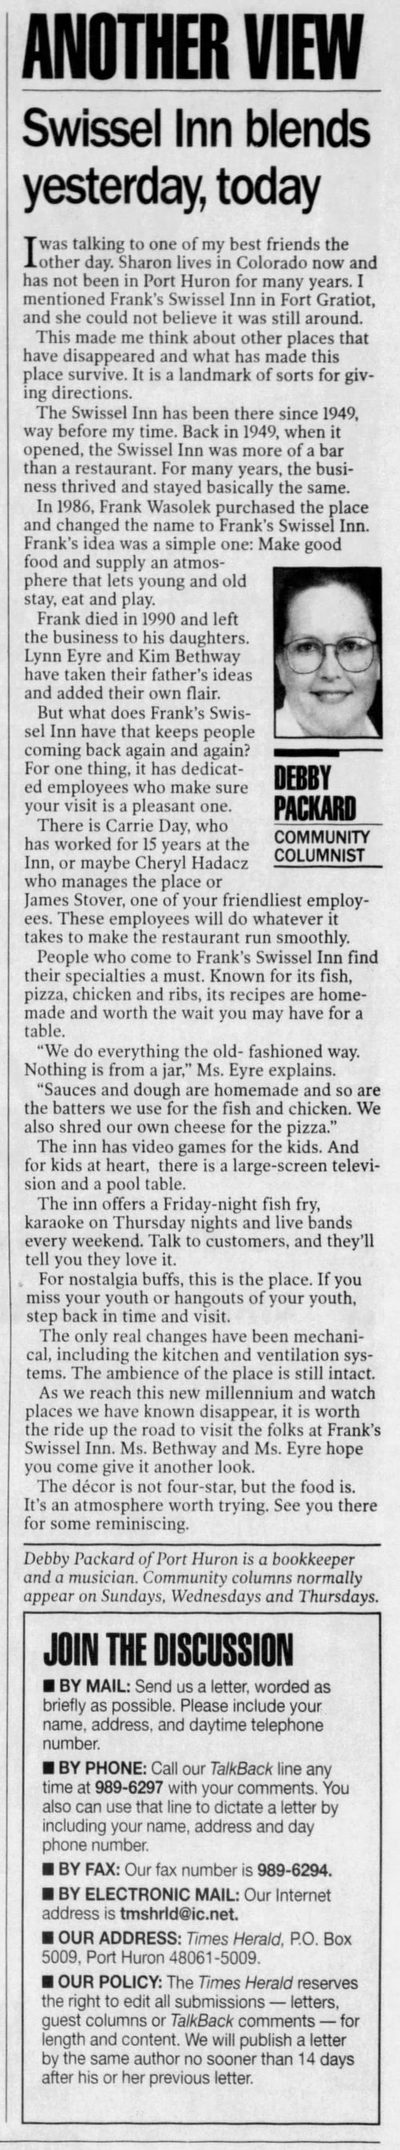 Swissel Inn - Oct 14 2000 Review